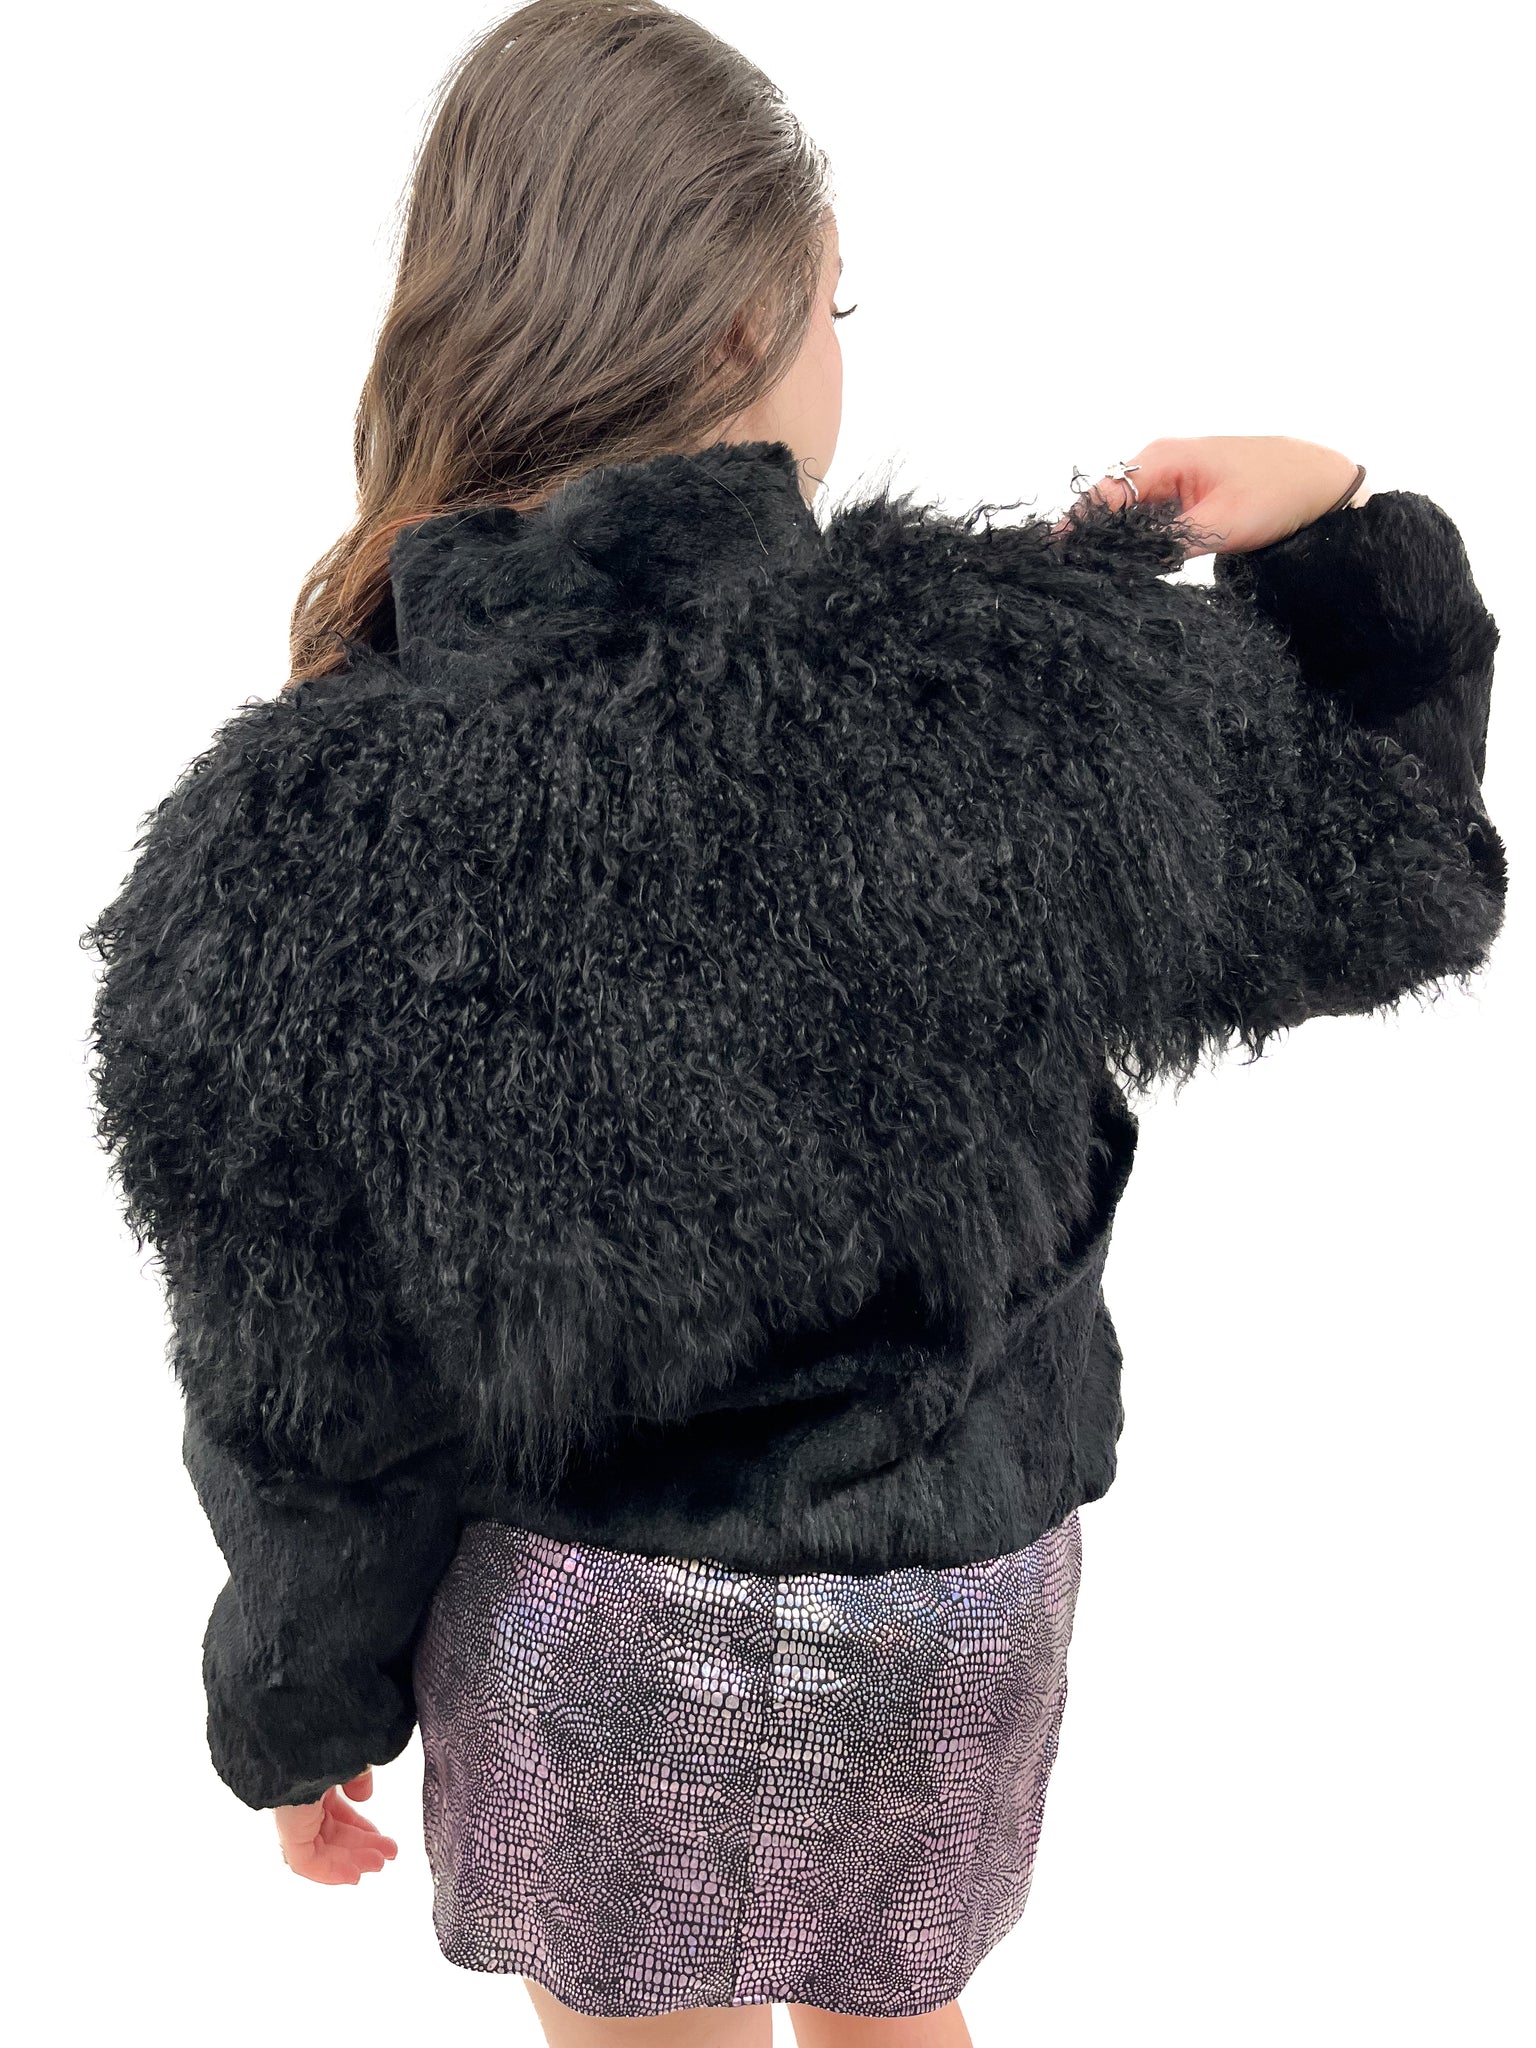 80s French Fur Coat